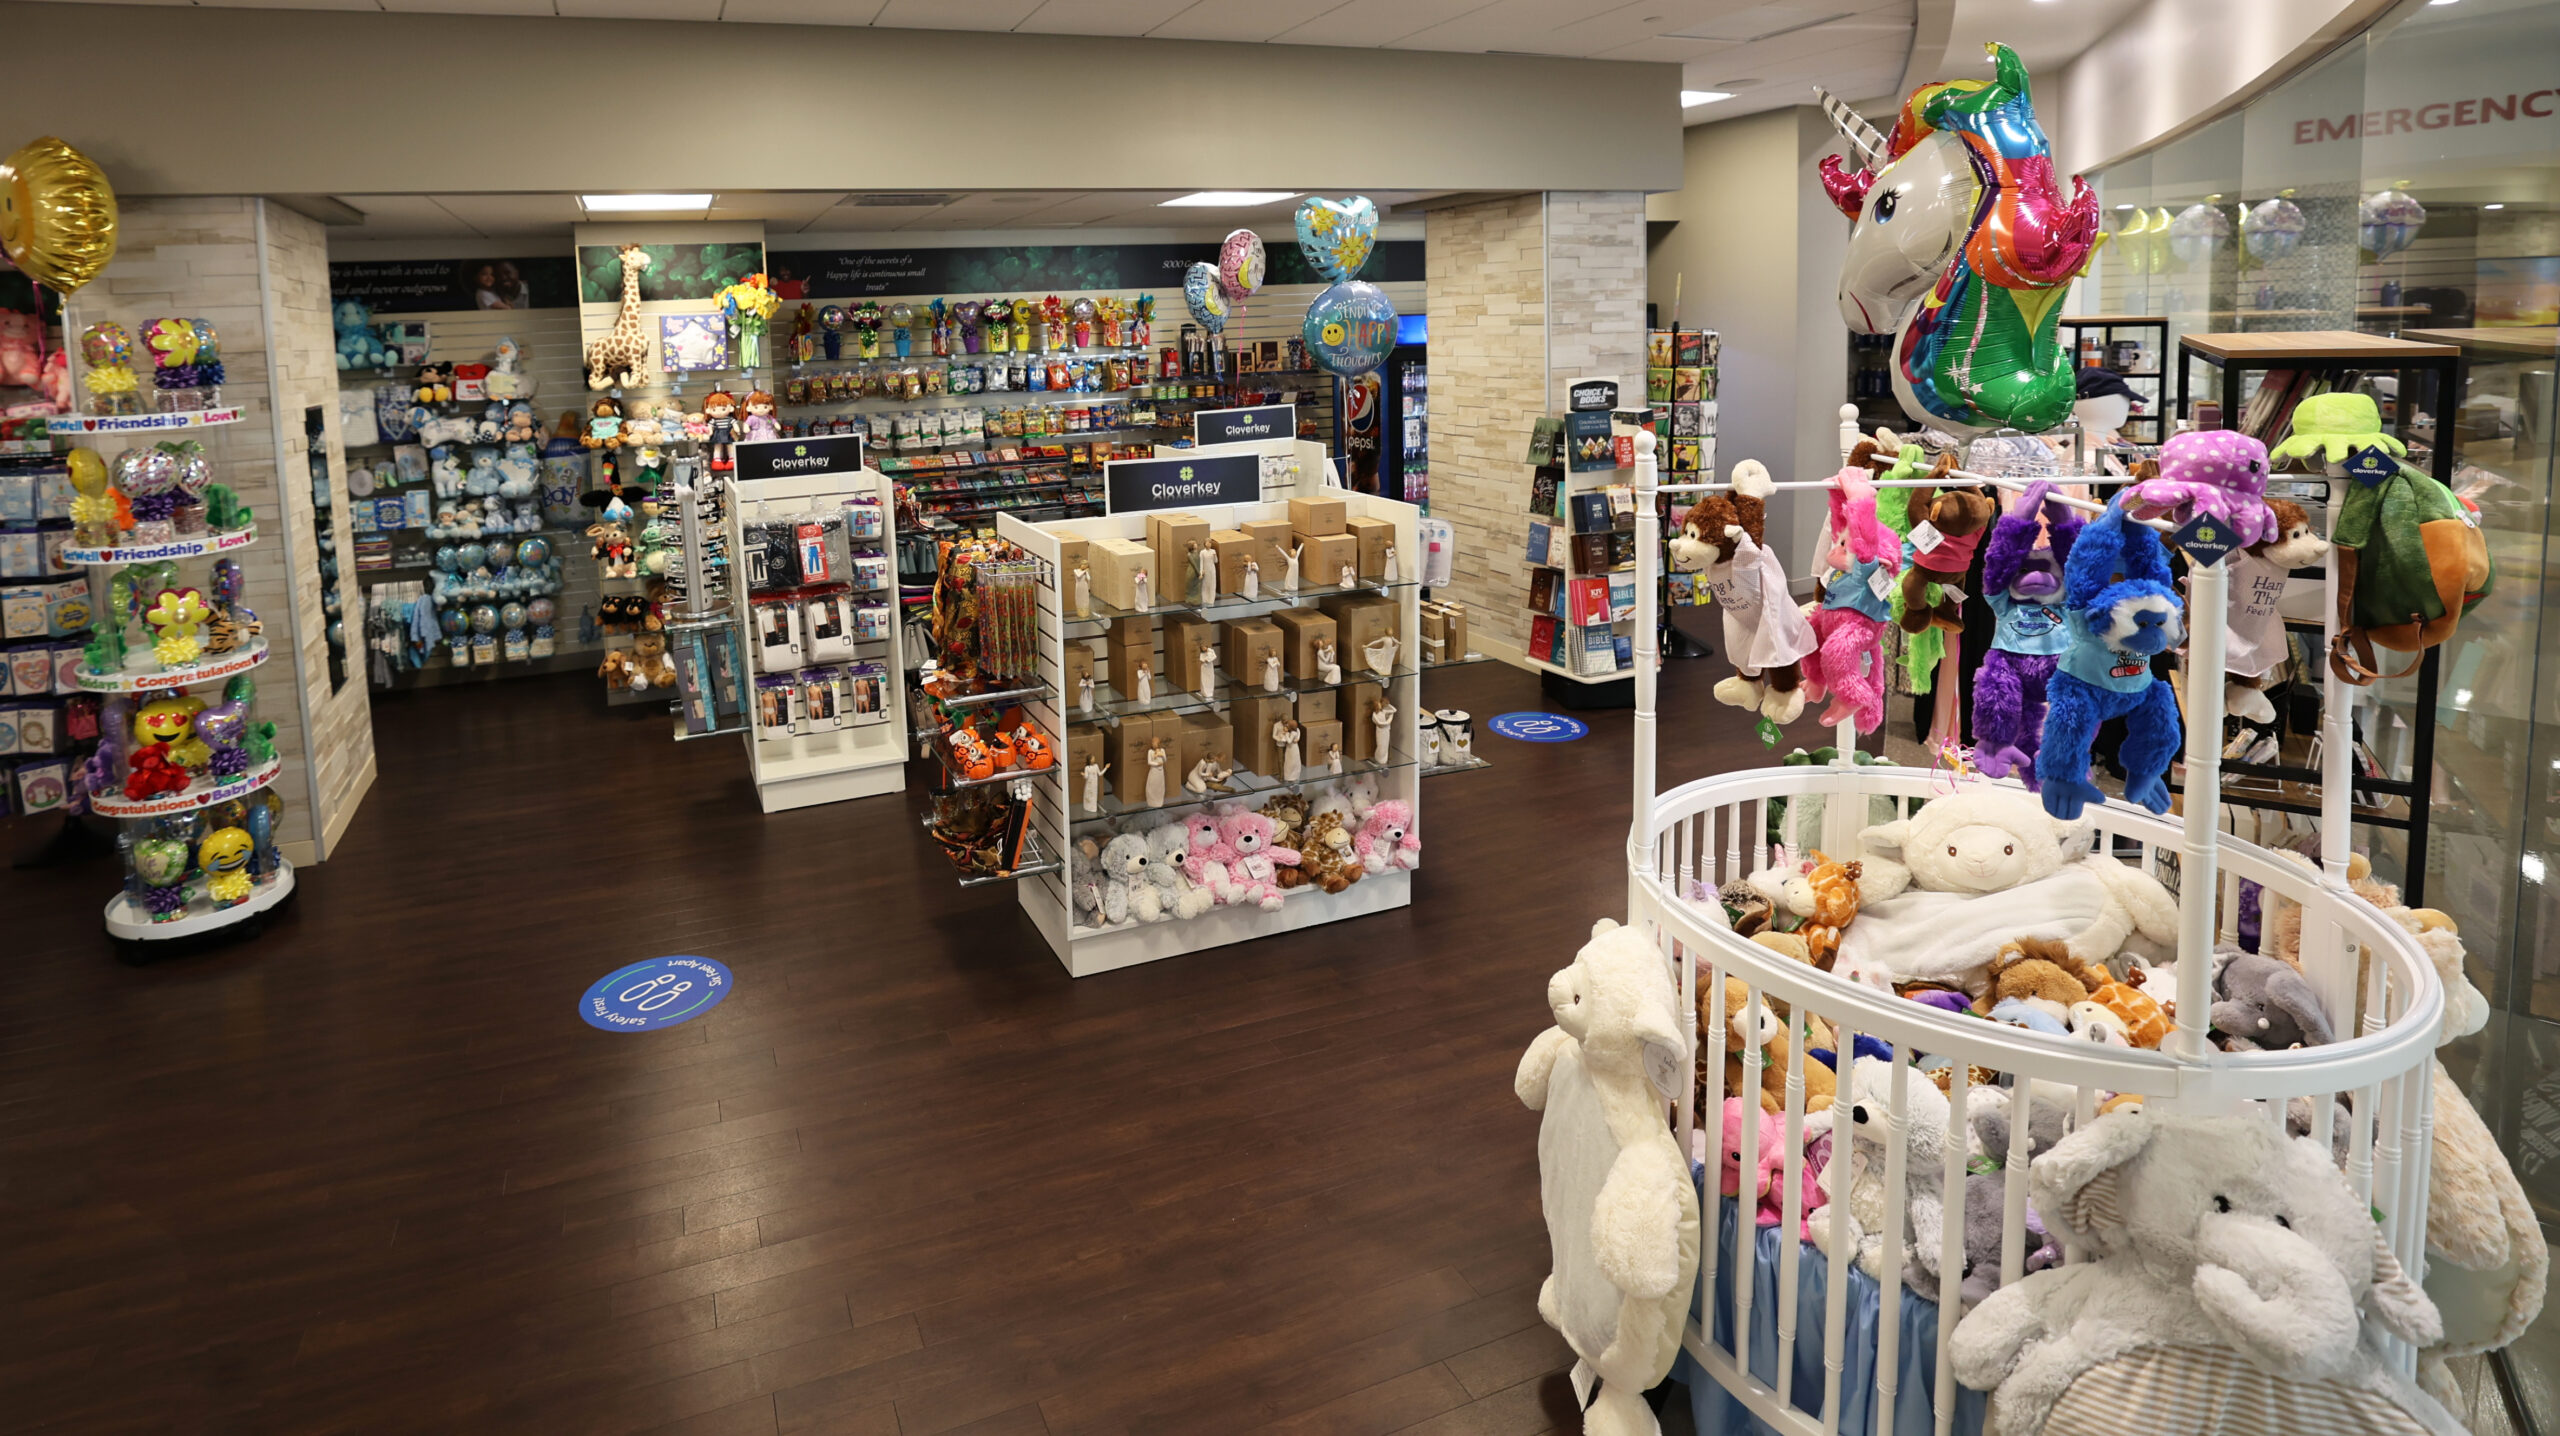 Cloverkey Gift Shop at Texas Health Huguley Hospital - Interior